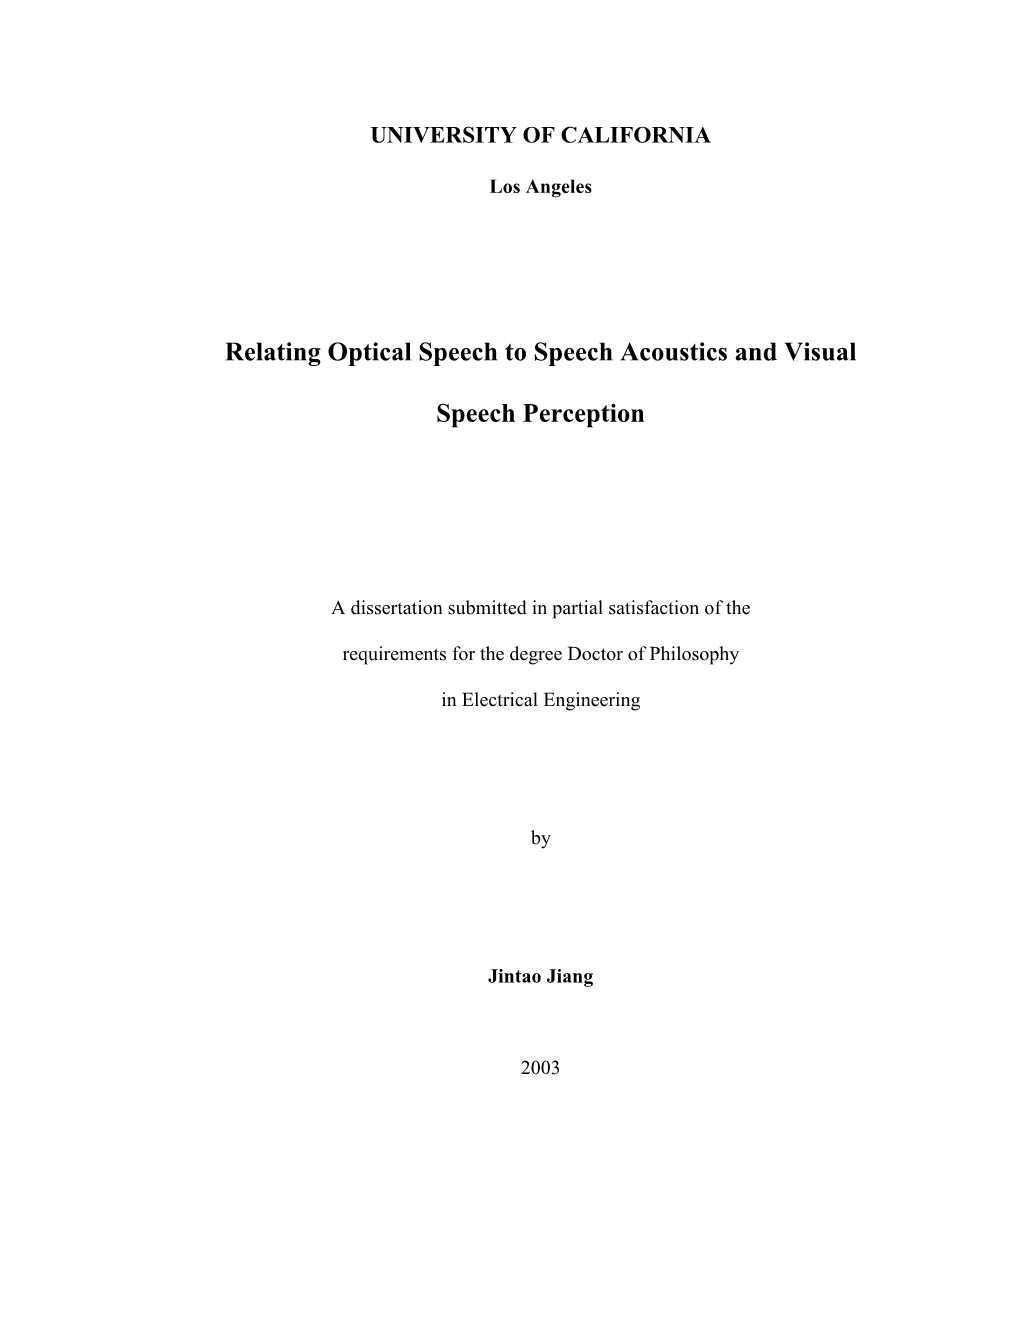 Relating Optical Speech to Speech Acoustics and Visual Speech Perception